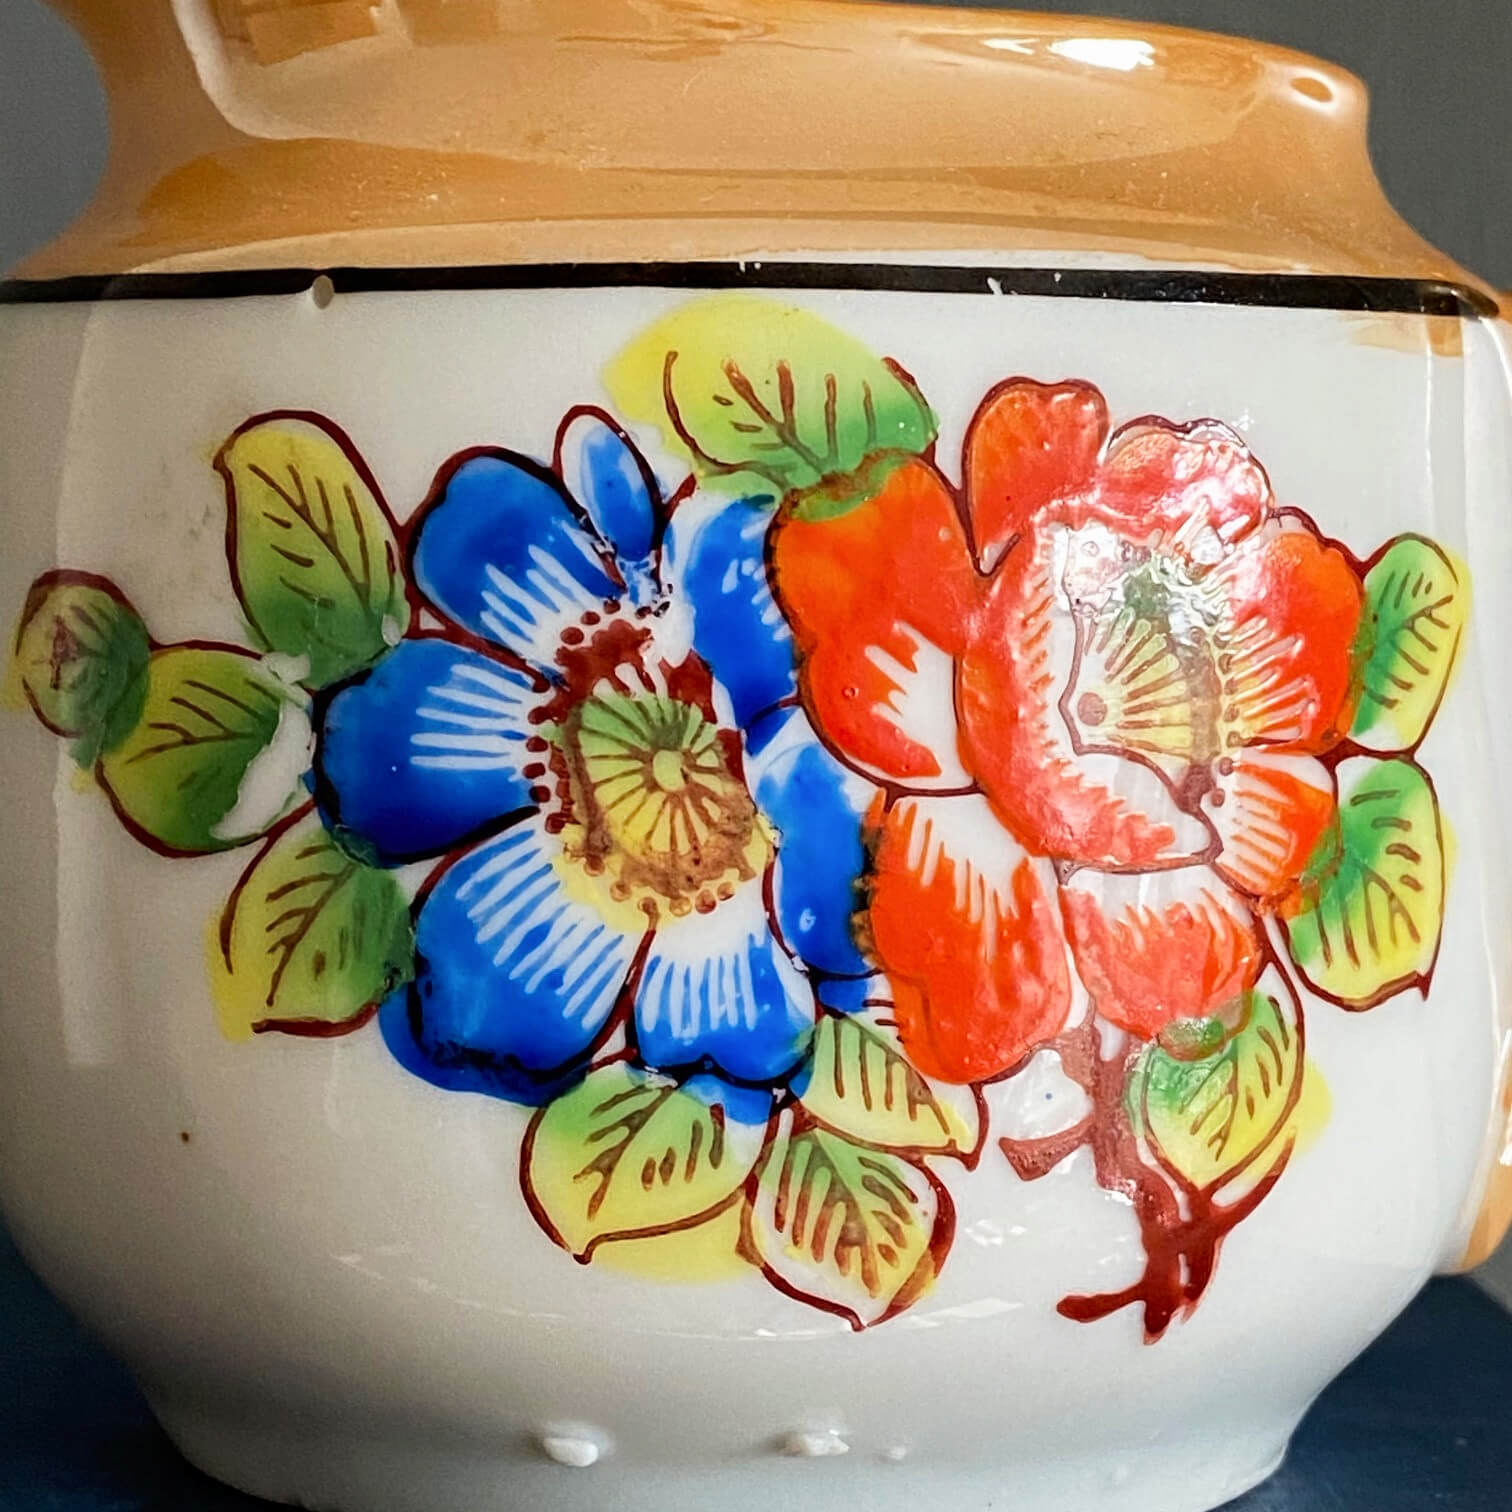 The Creamer of Many Calamities - Vintage Orange Lustreware Porcelain Creamer Made in Japan circa 1920-1940s